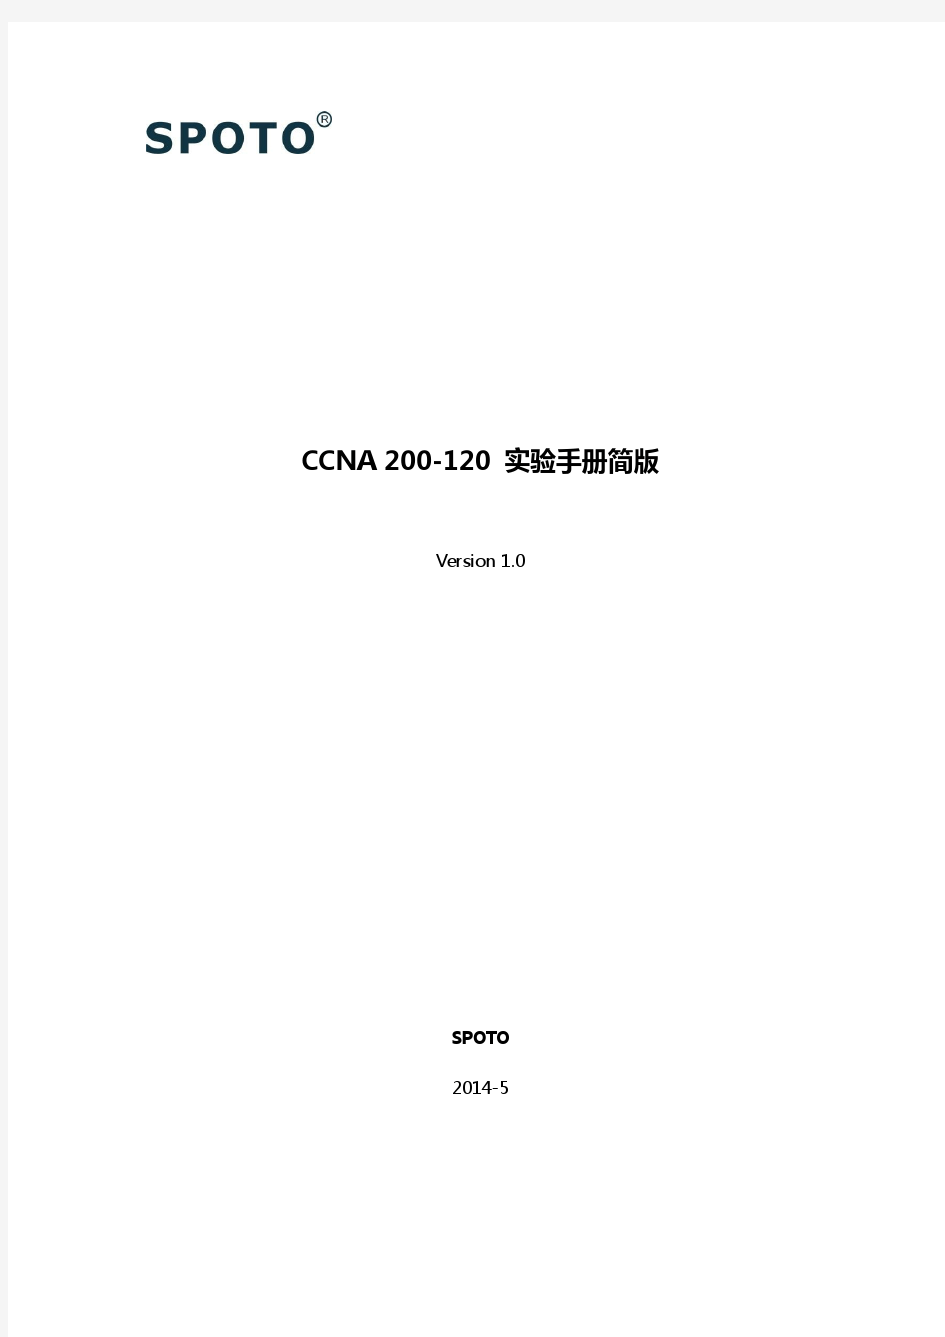 CCNA 200-120 实验手册-201406